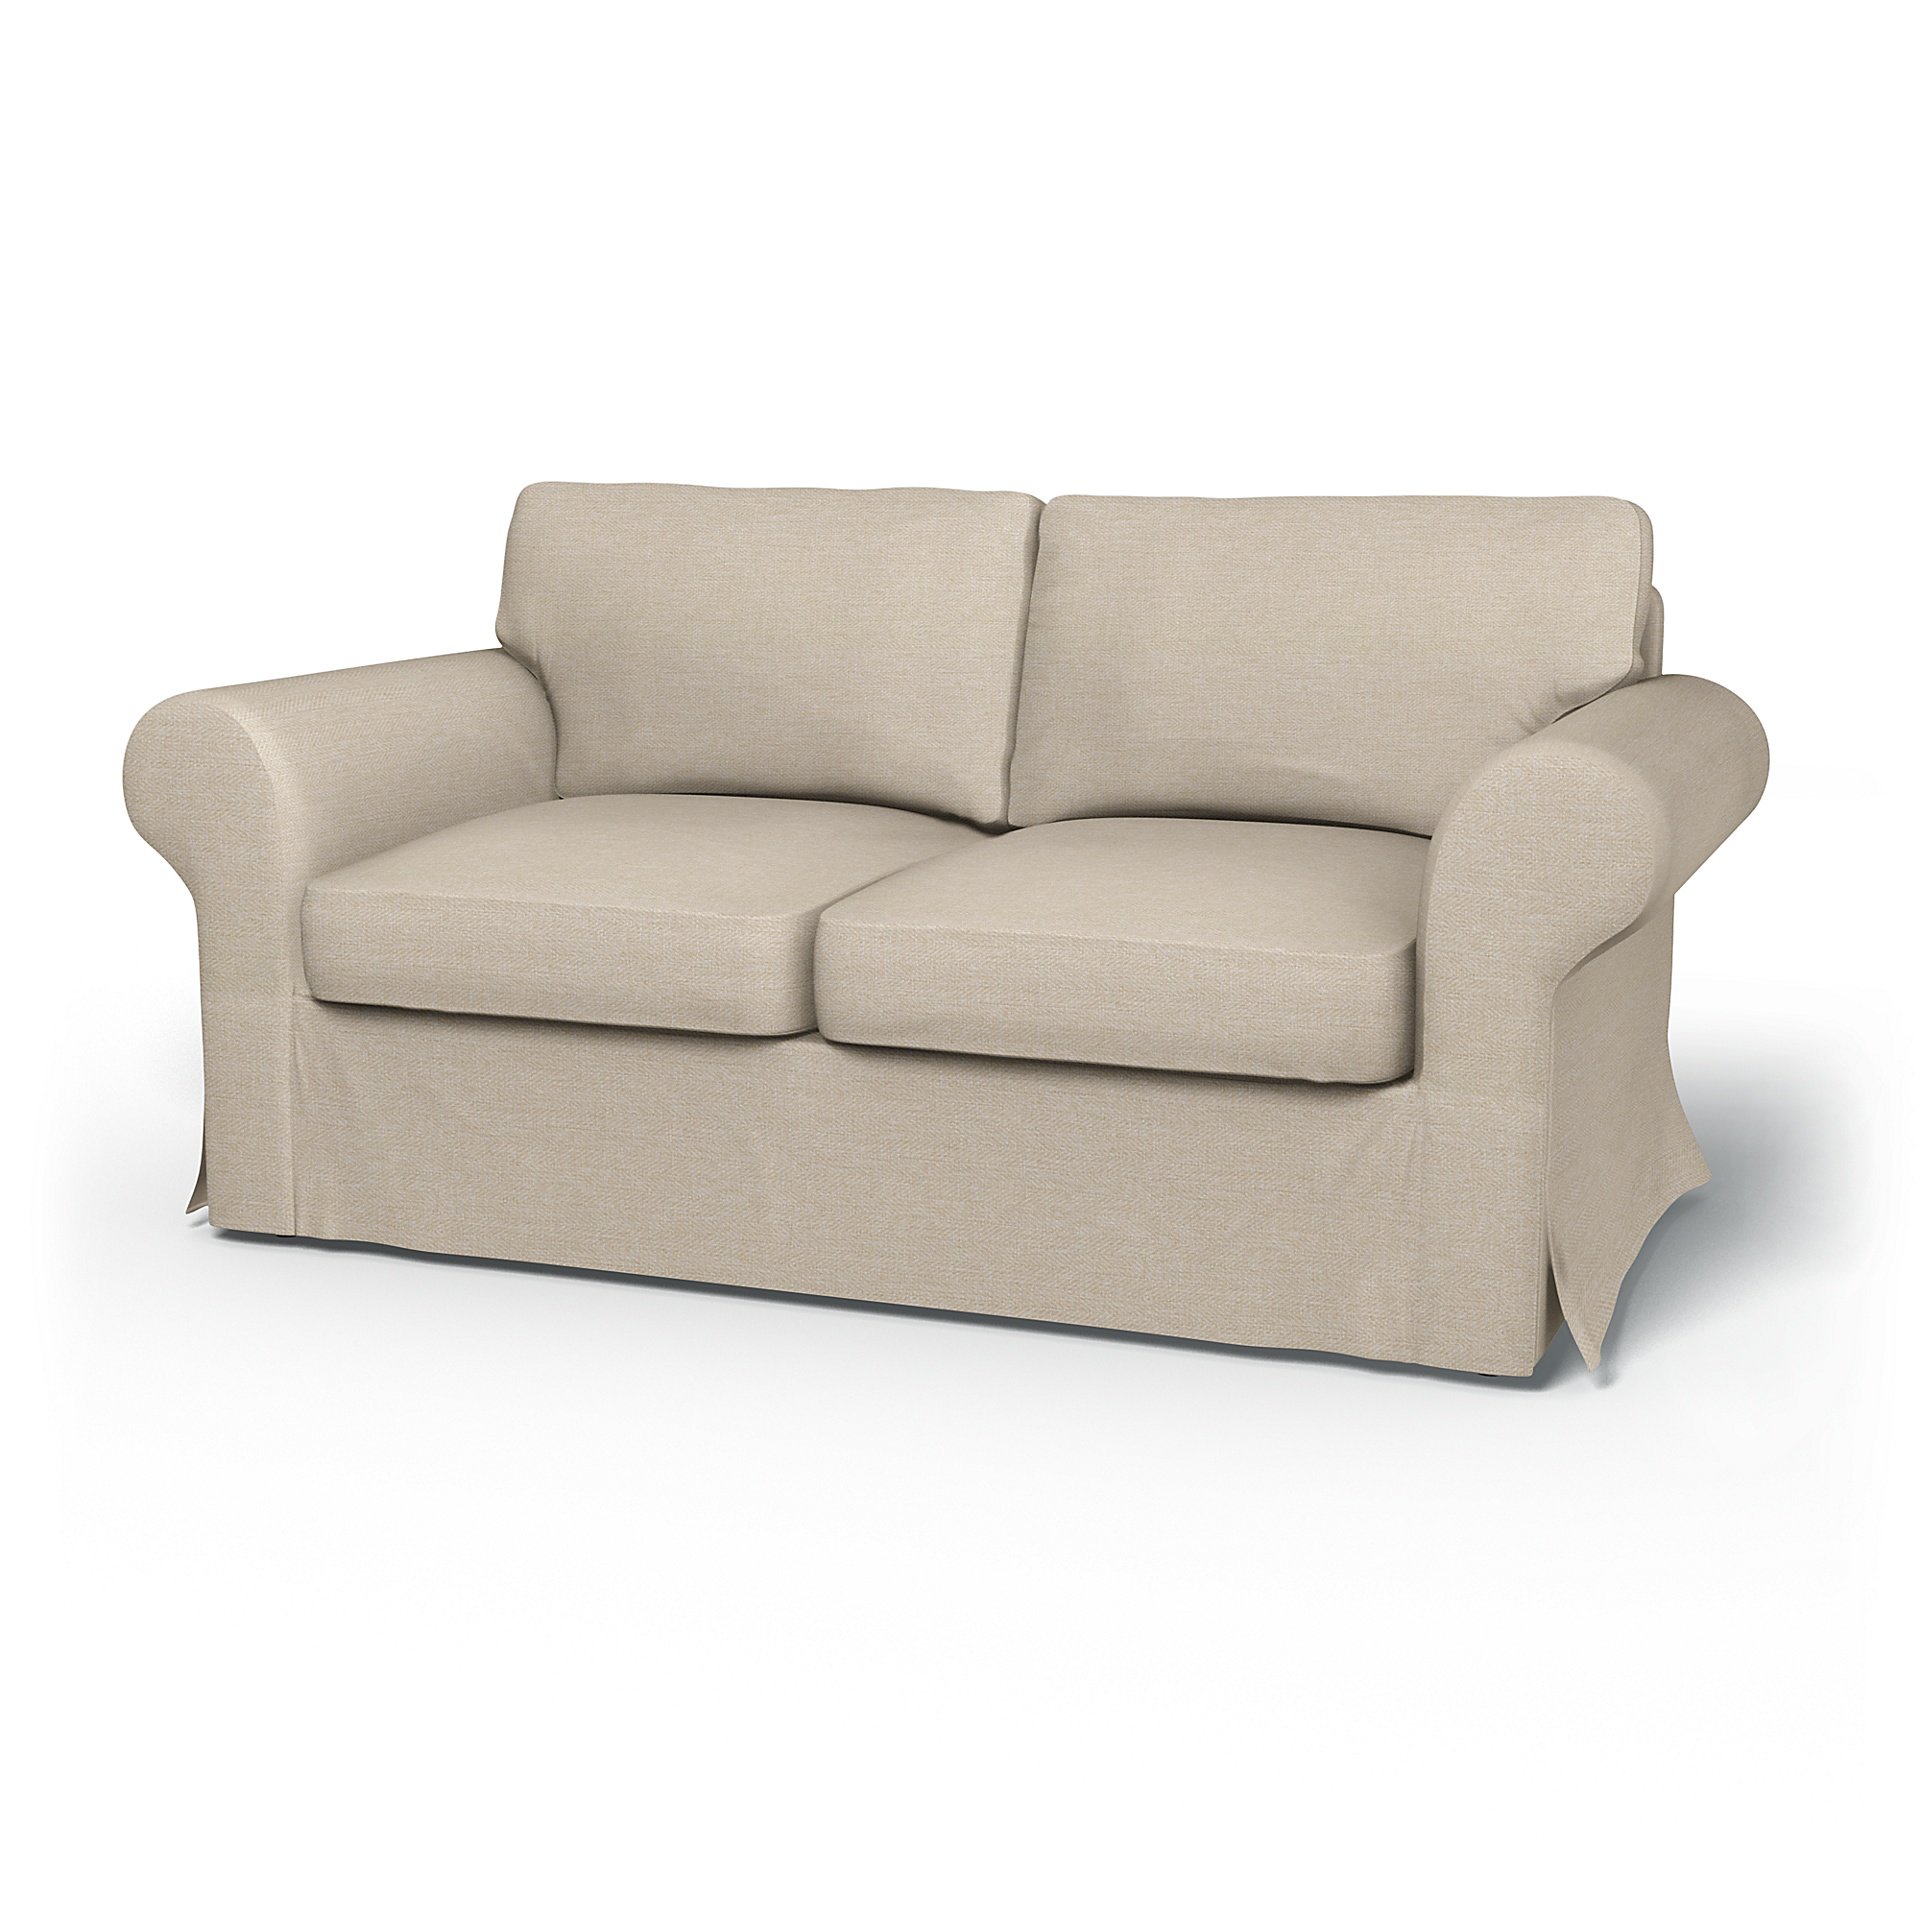 IKEA - Ektorp 2 Seater Sofa Bed Cover, Natural, Boucle & Texture - Bemz